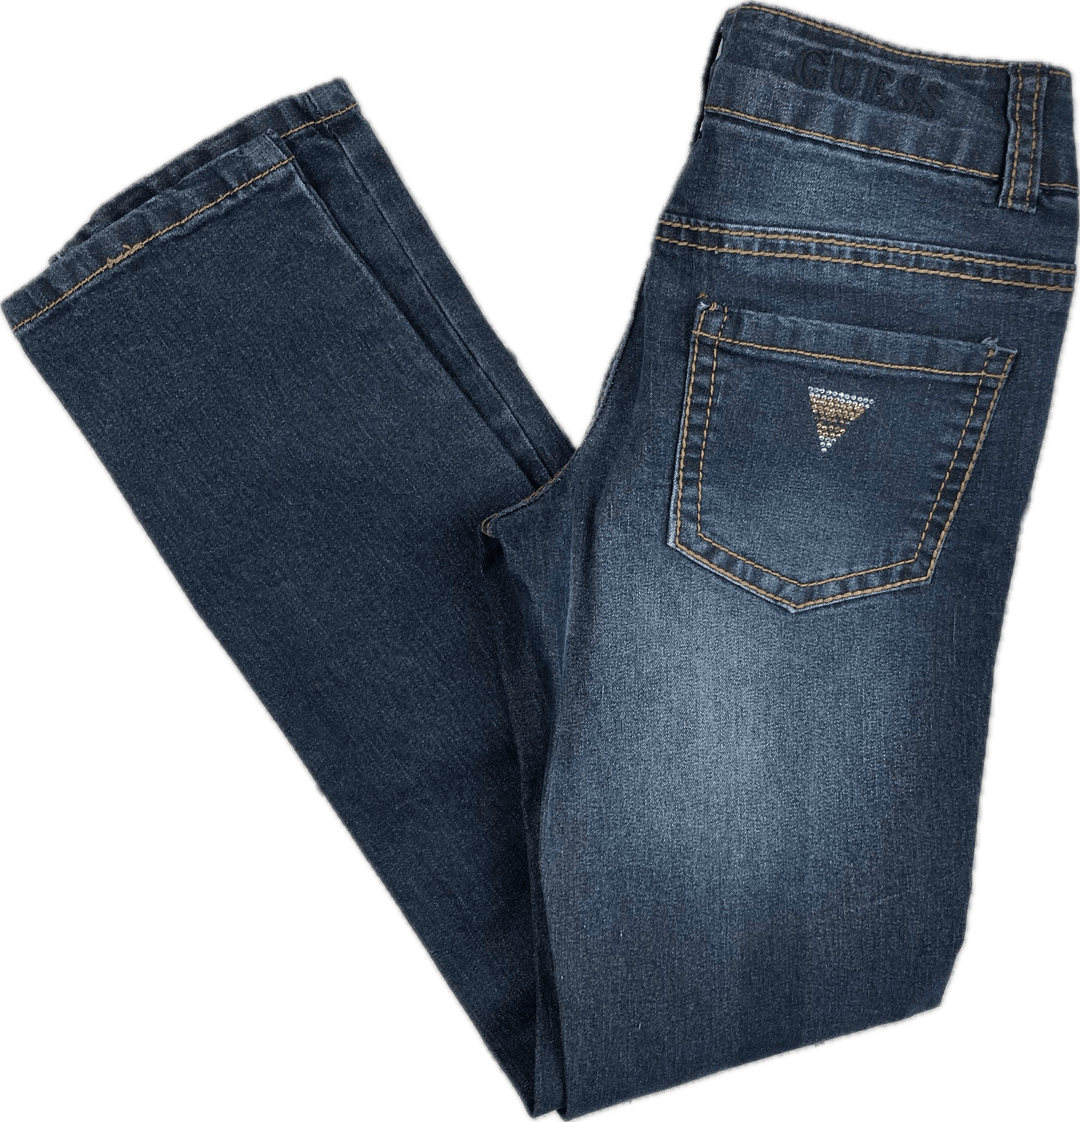 Guess Daredevil Skinny Leg Girls Jeans - Size 8 - Jean Pool